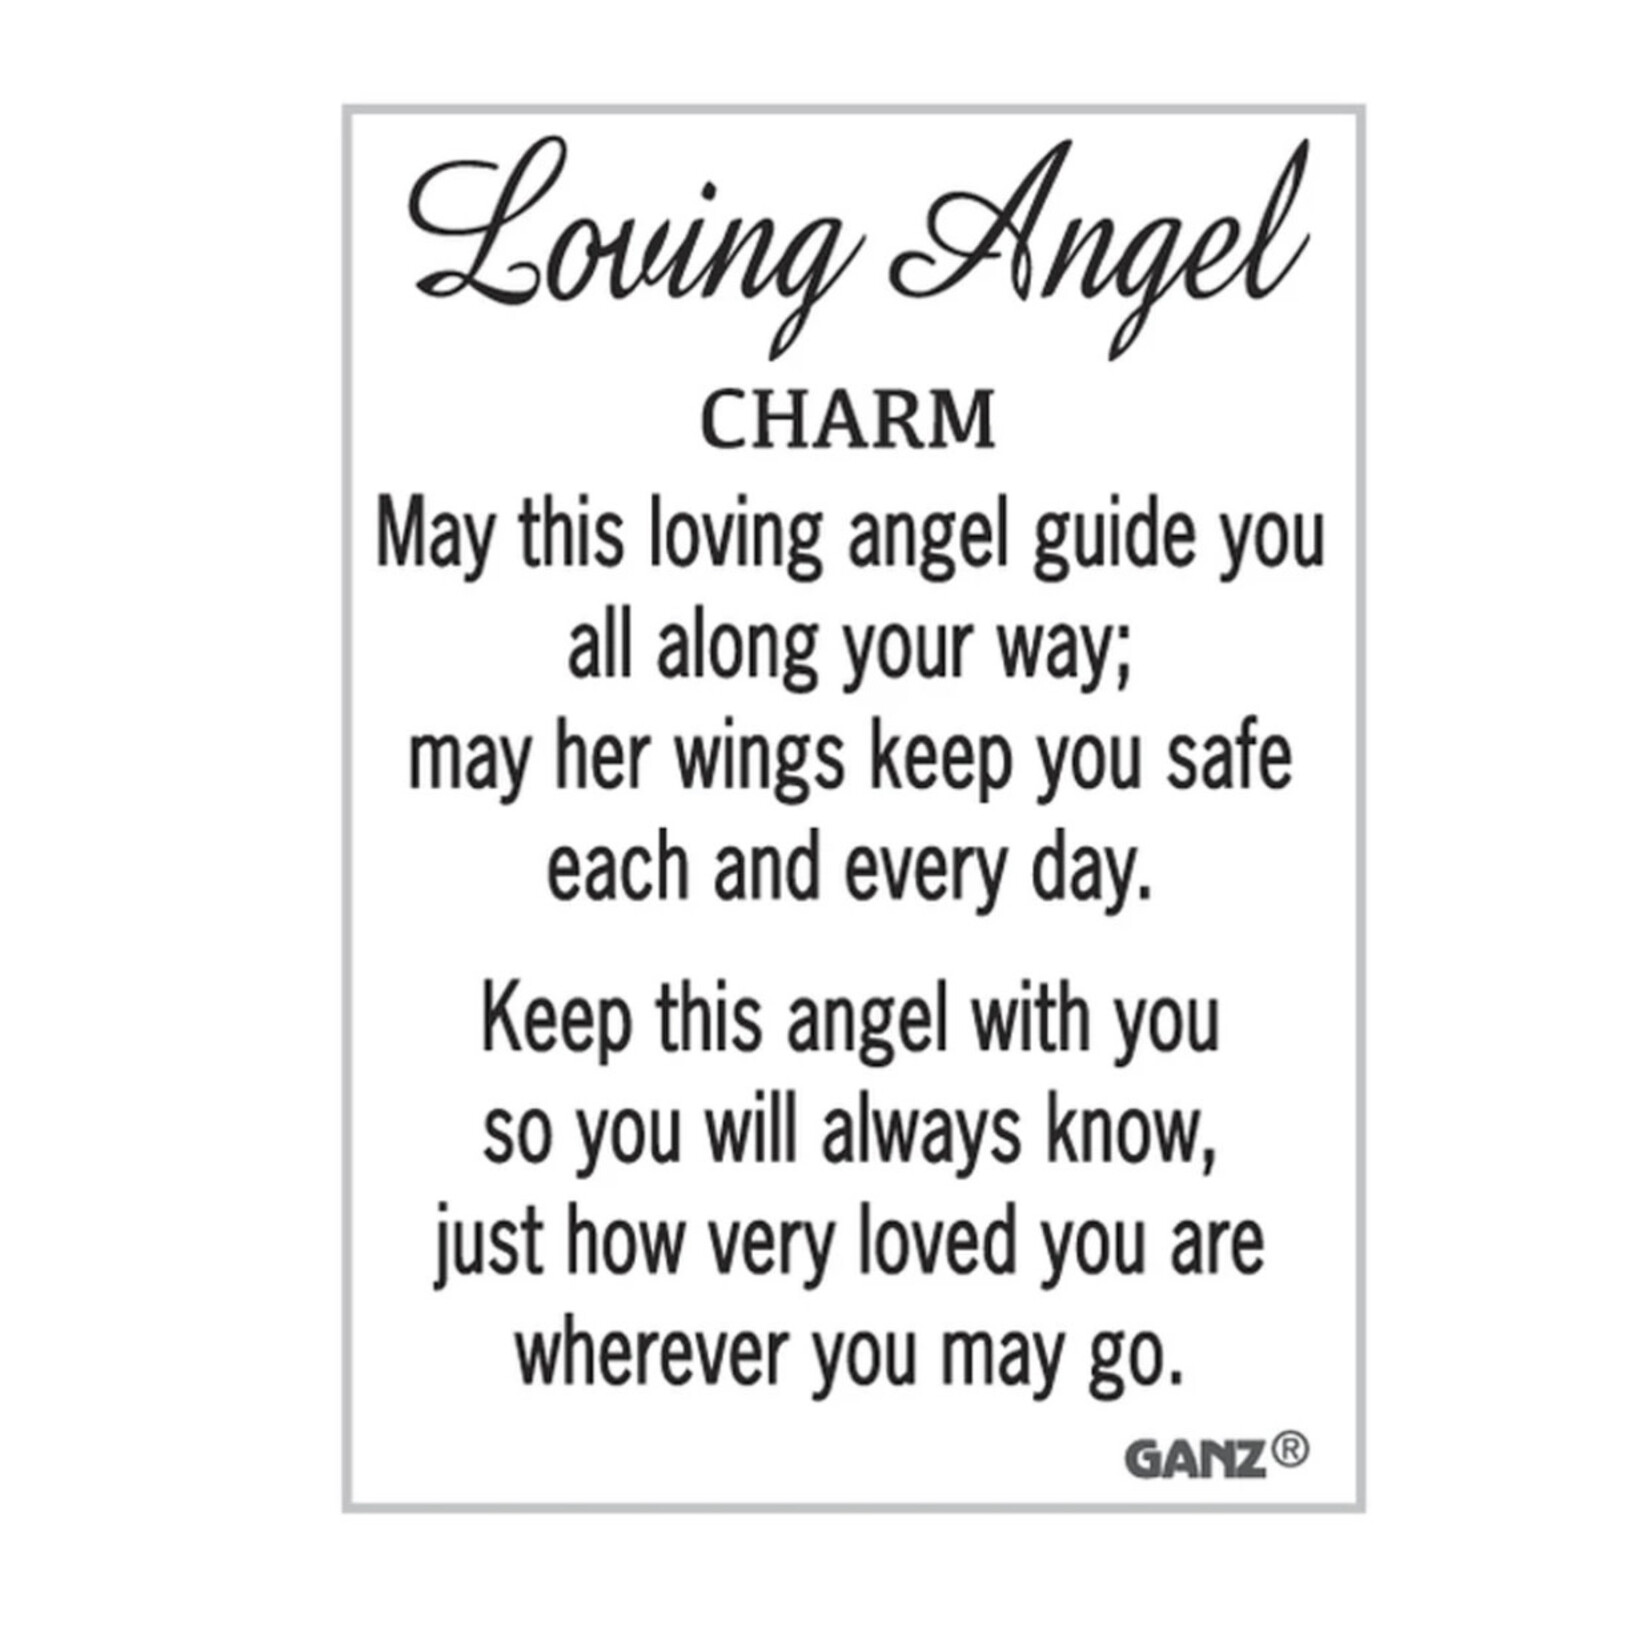 Ganz Loving Angel Charm